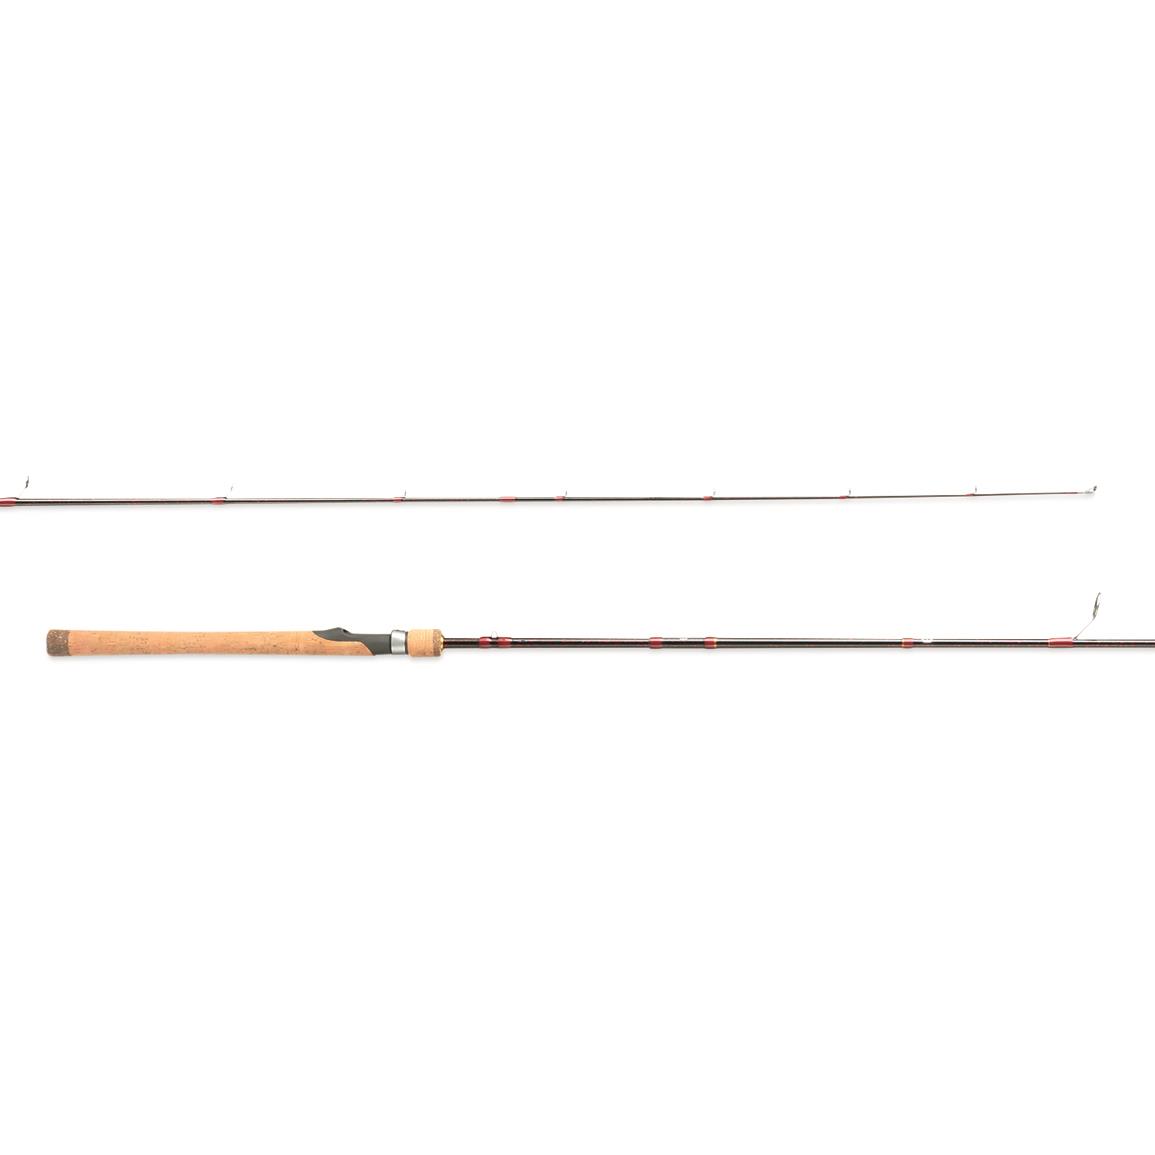 Shimano Convergence Spinning Travel Rod, 7' Length, Medium Power, Fast Action, 4 Piece